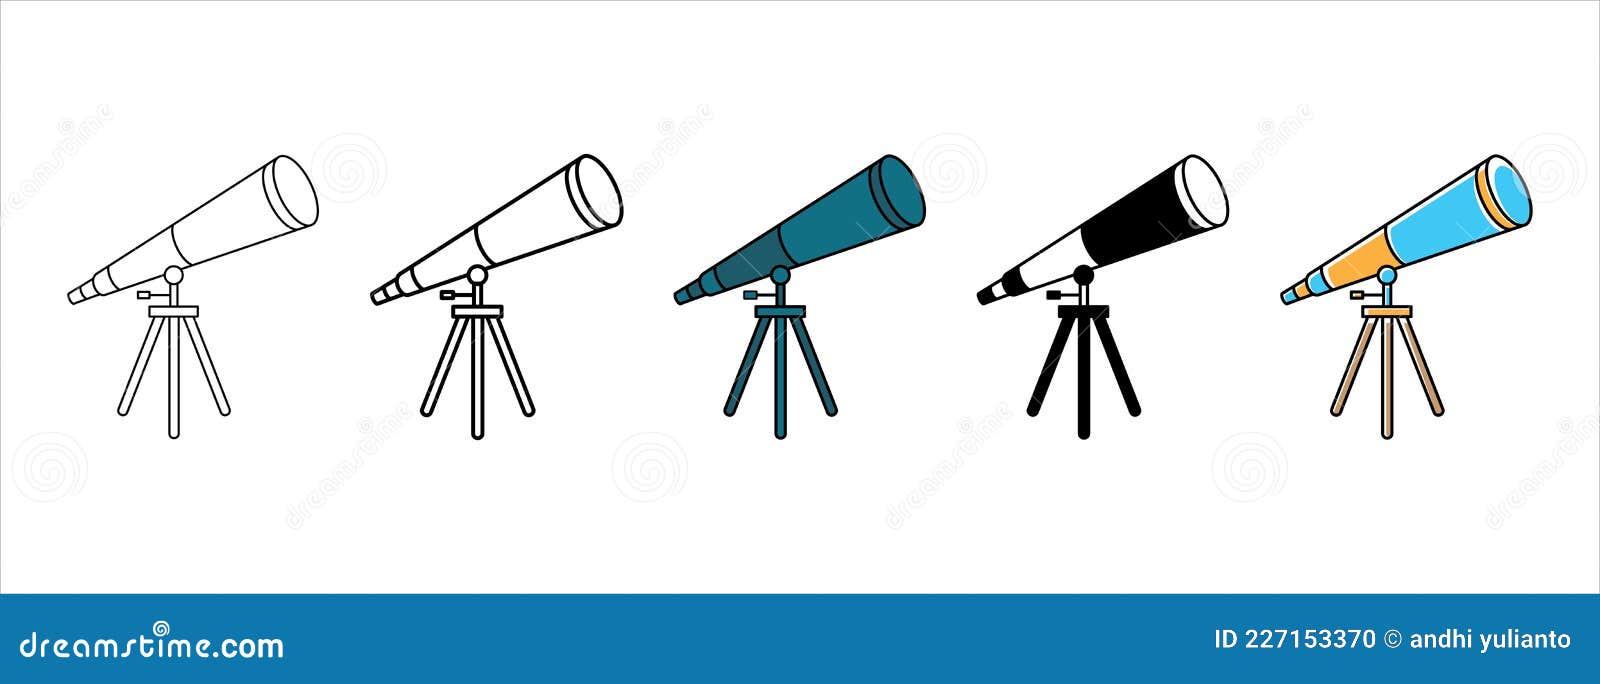 telescope icon  set. space telescope observer   set